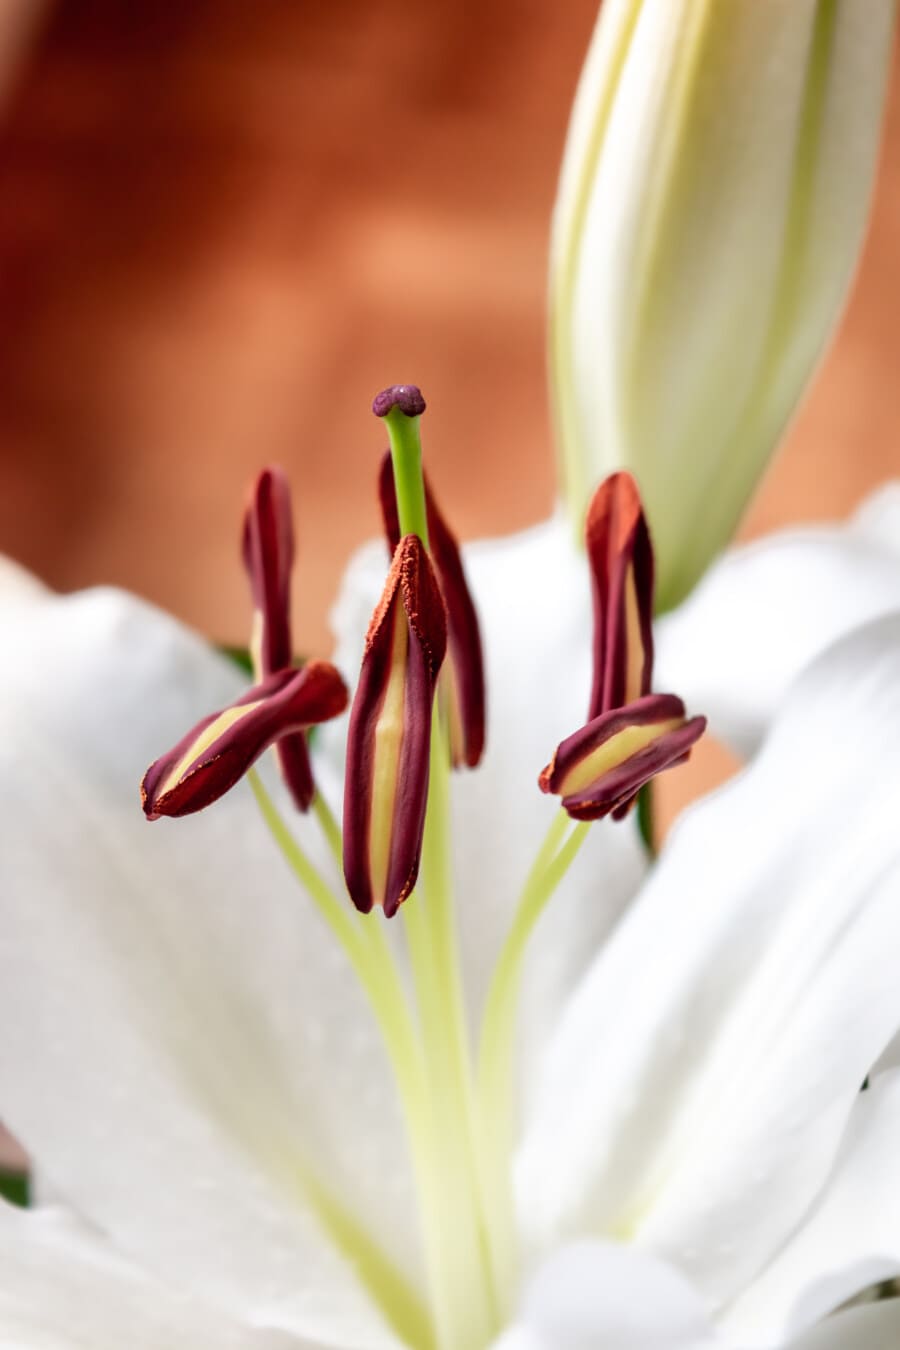 lily, pollen, pistil, white flower, close-up, details, purity, petals, elegant, flower